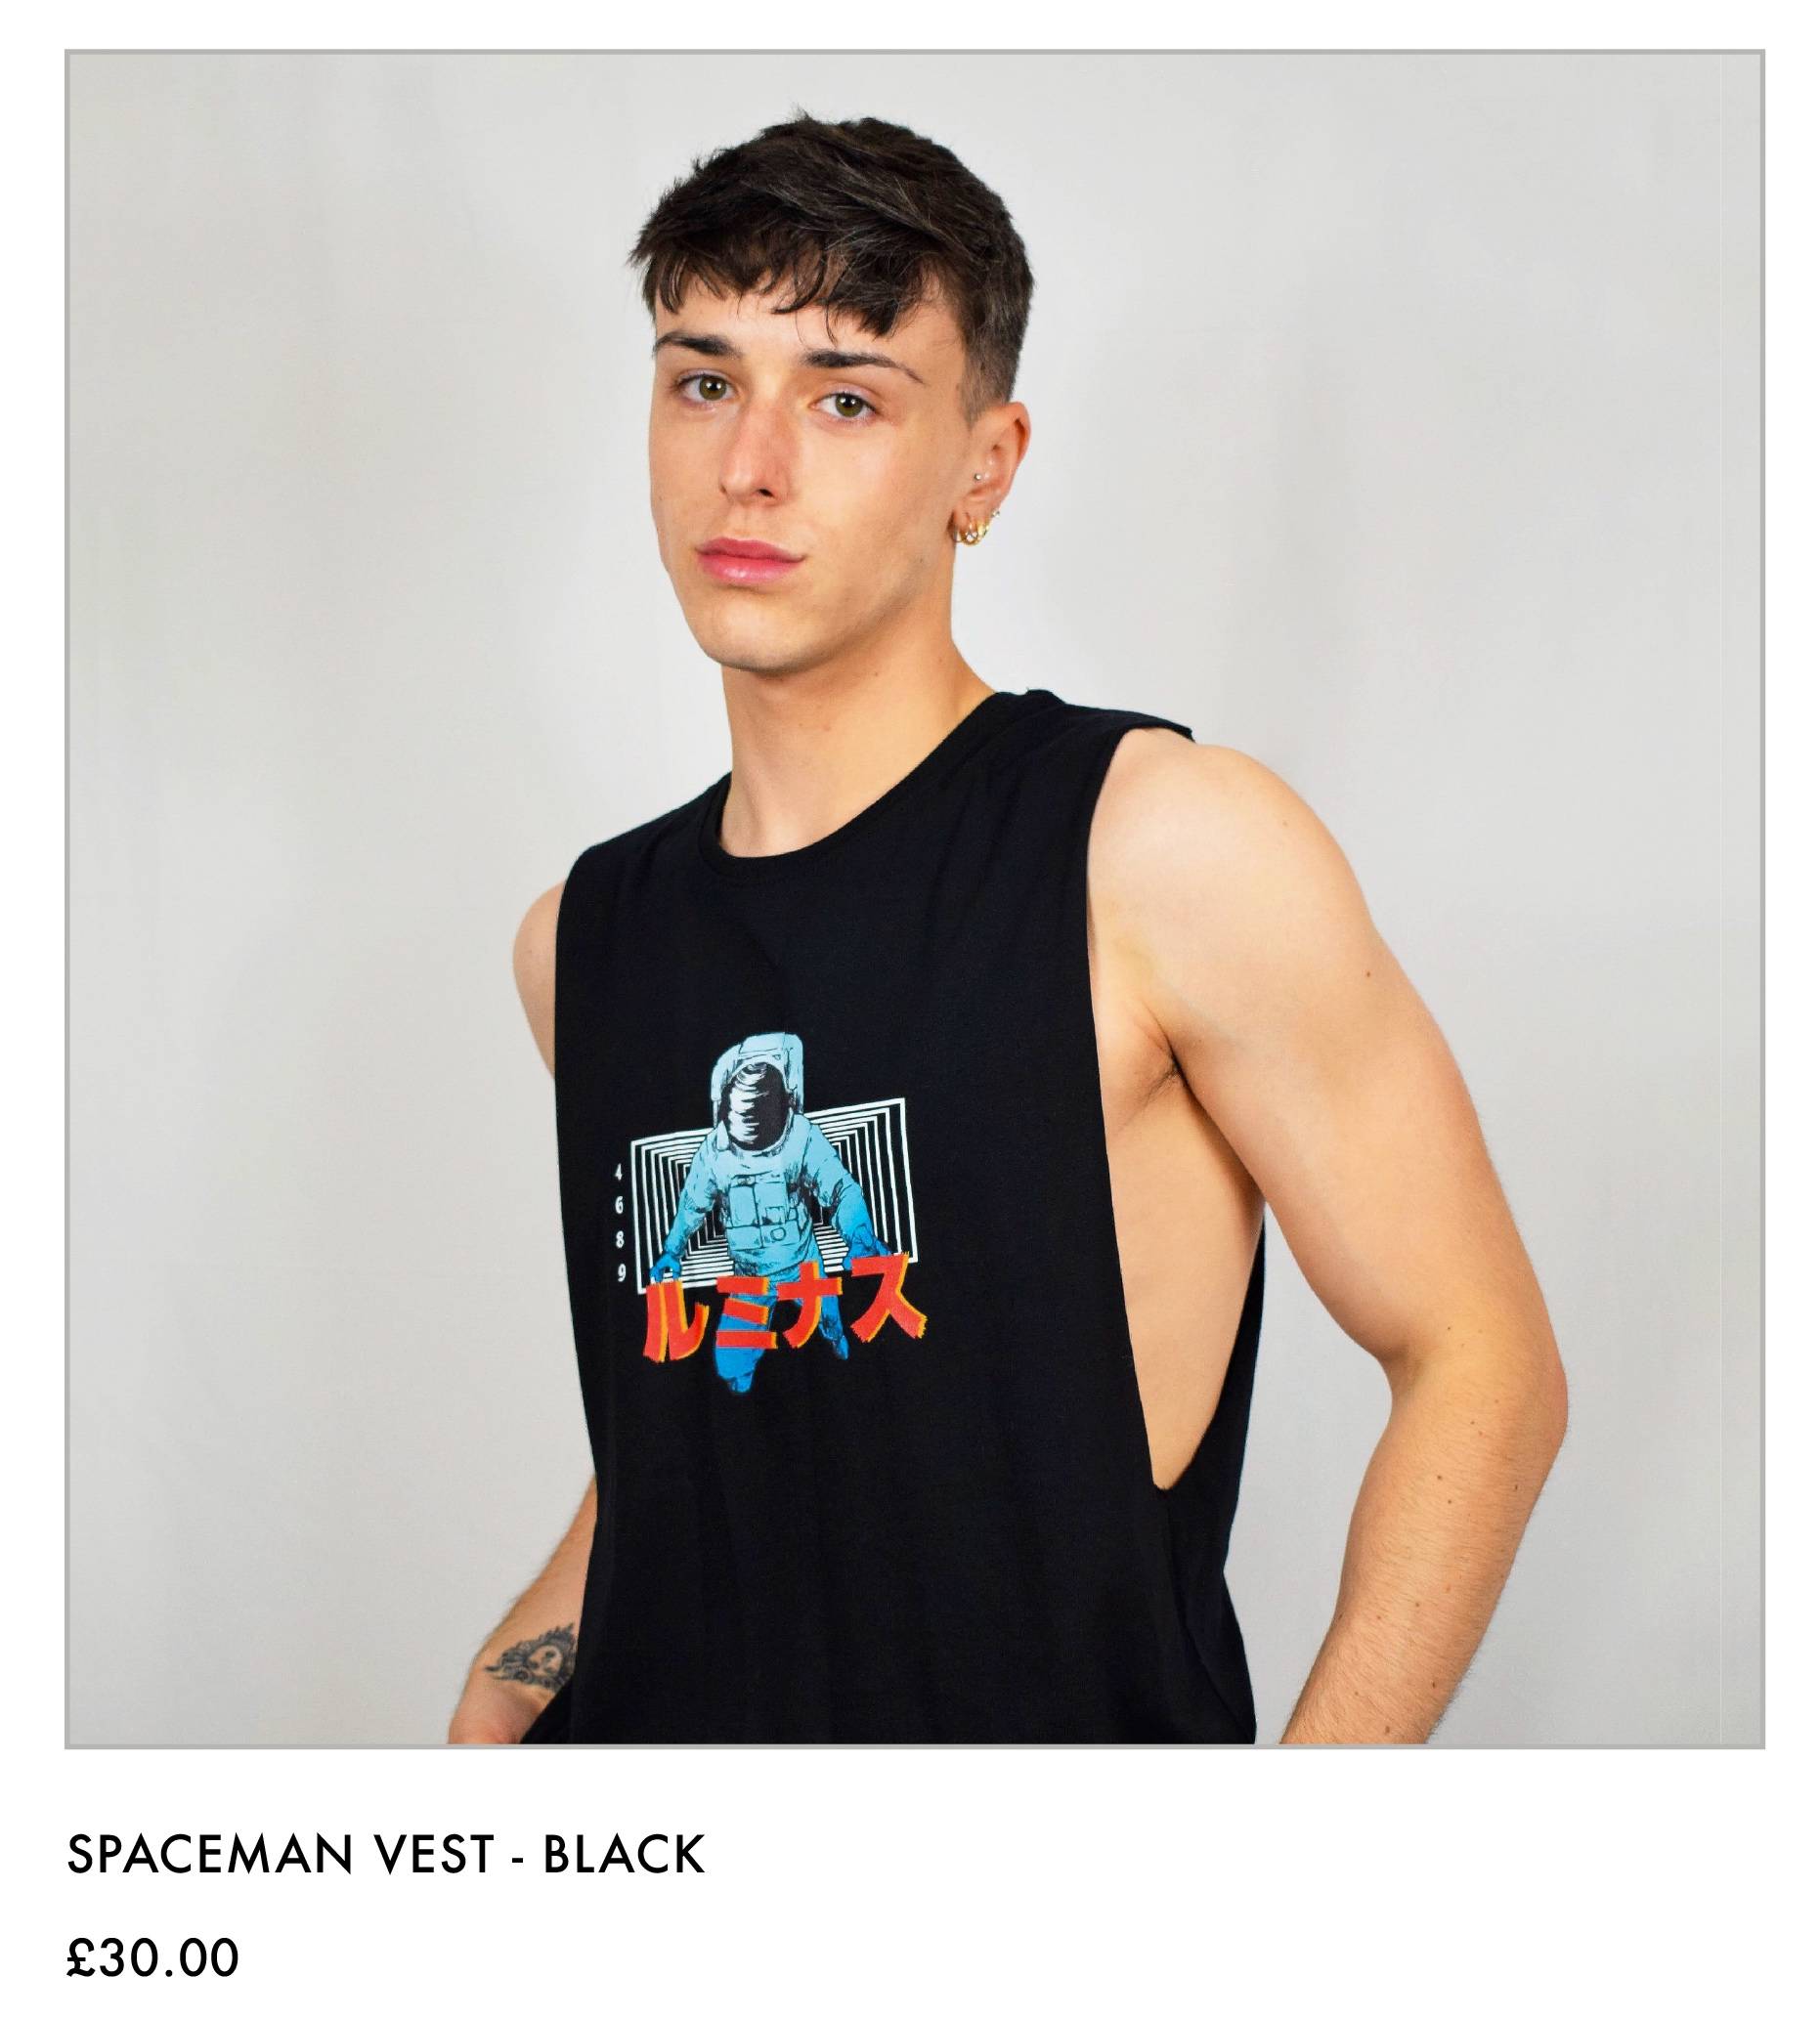 Spaceman Vest - Black